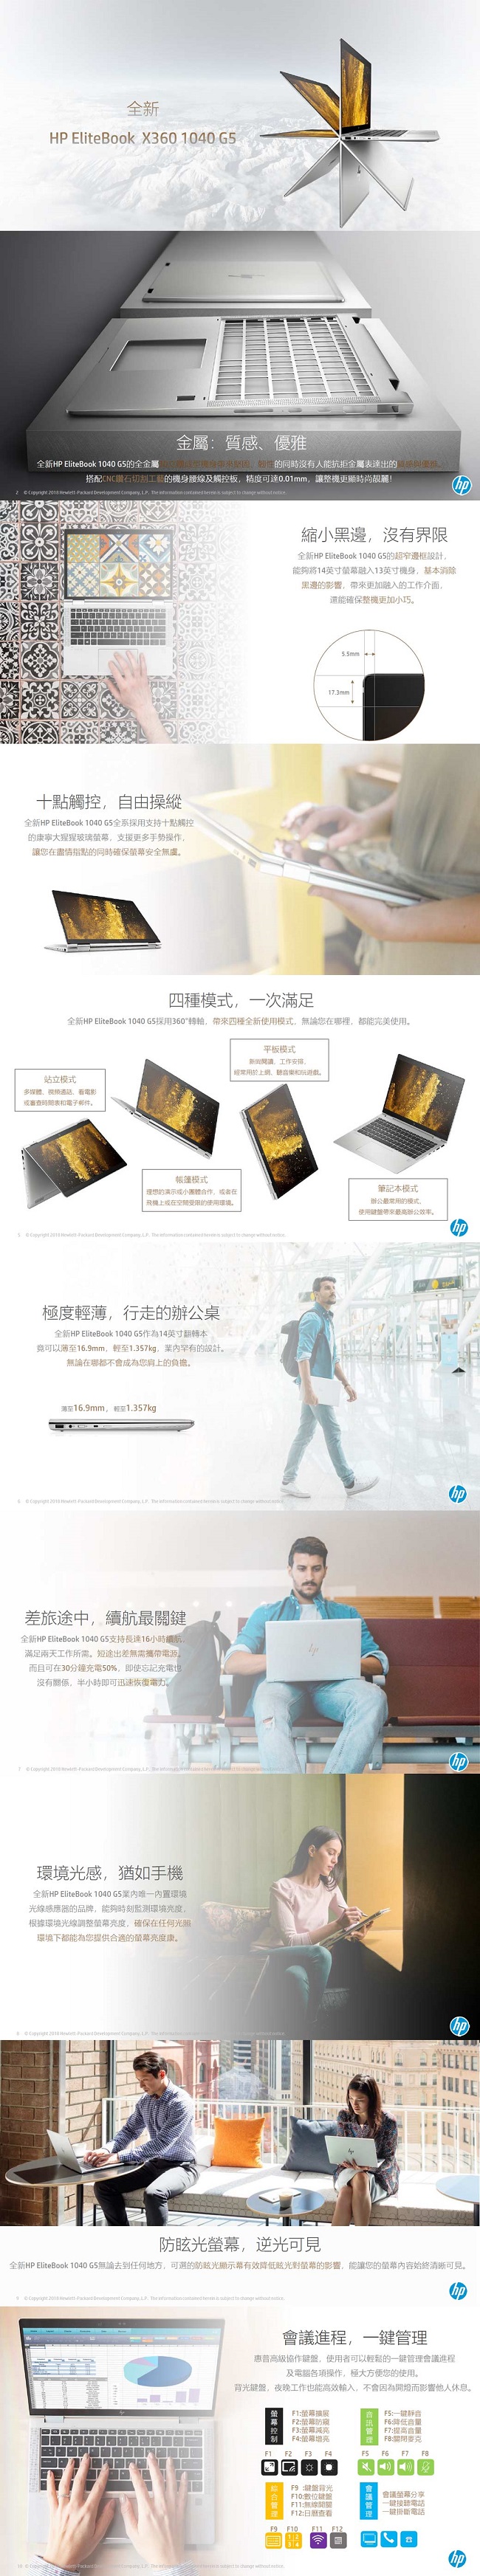 HP Elitebook x360 1040 G5 Intel® i5 14吋商務筆電